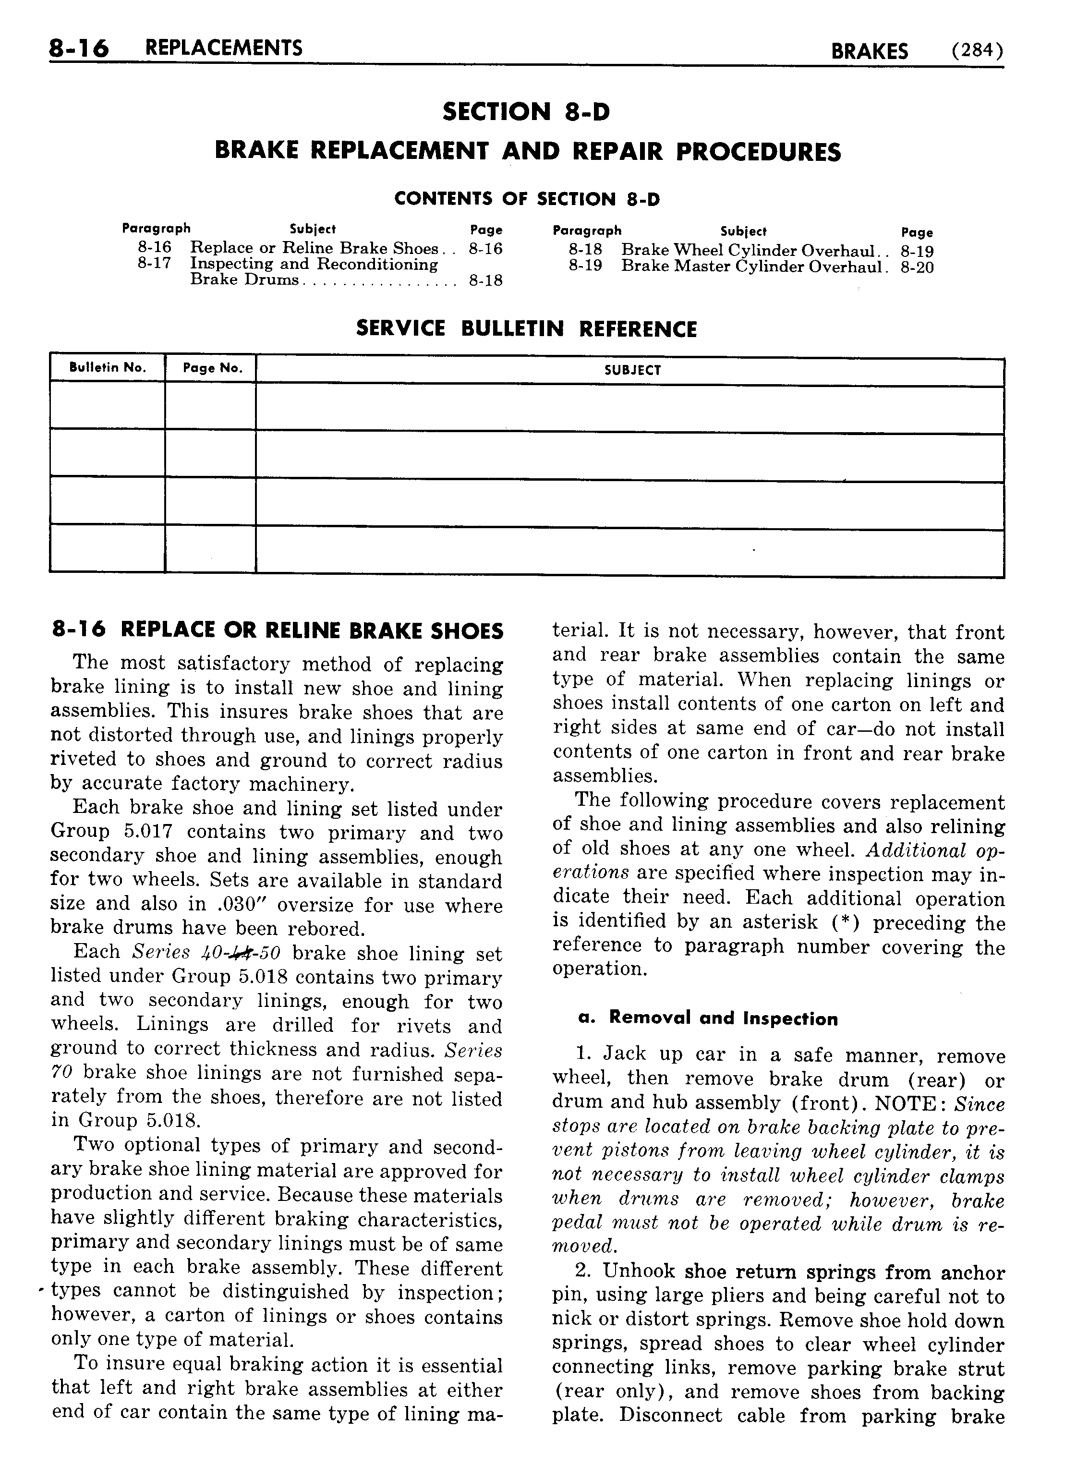 n_09 1951 Buick Shop Manual - Brakes-016-016.jpg